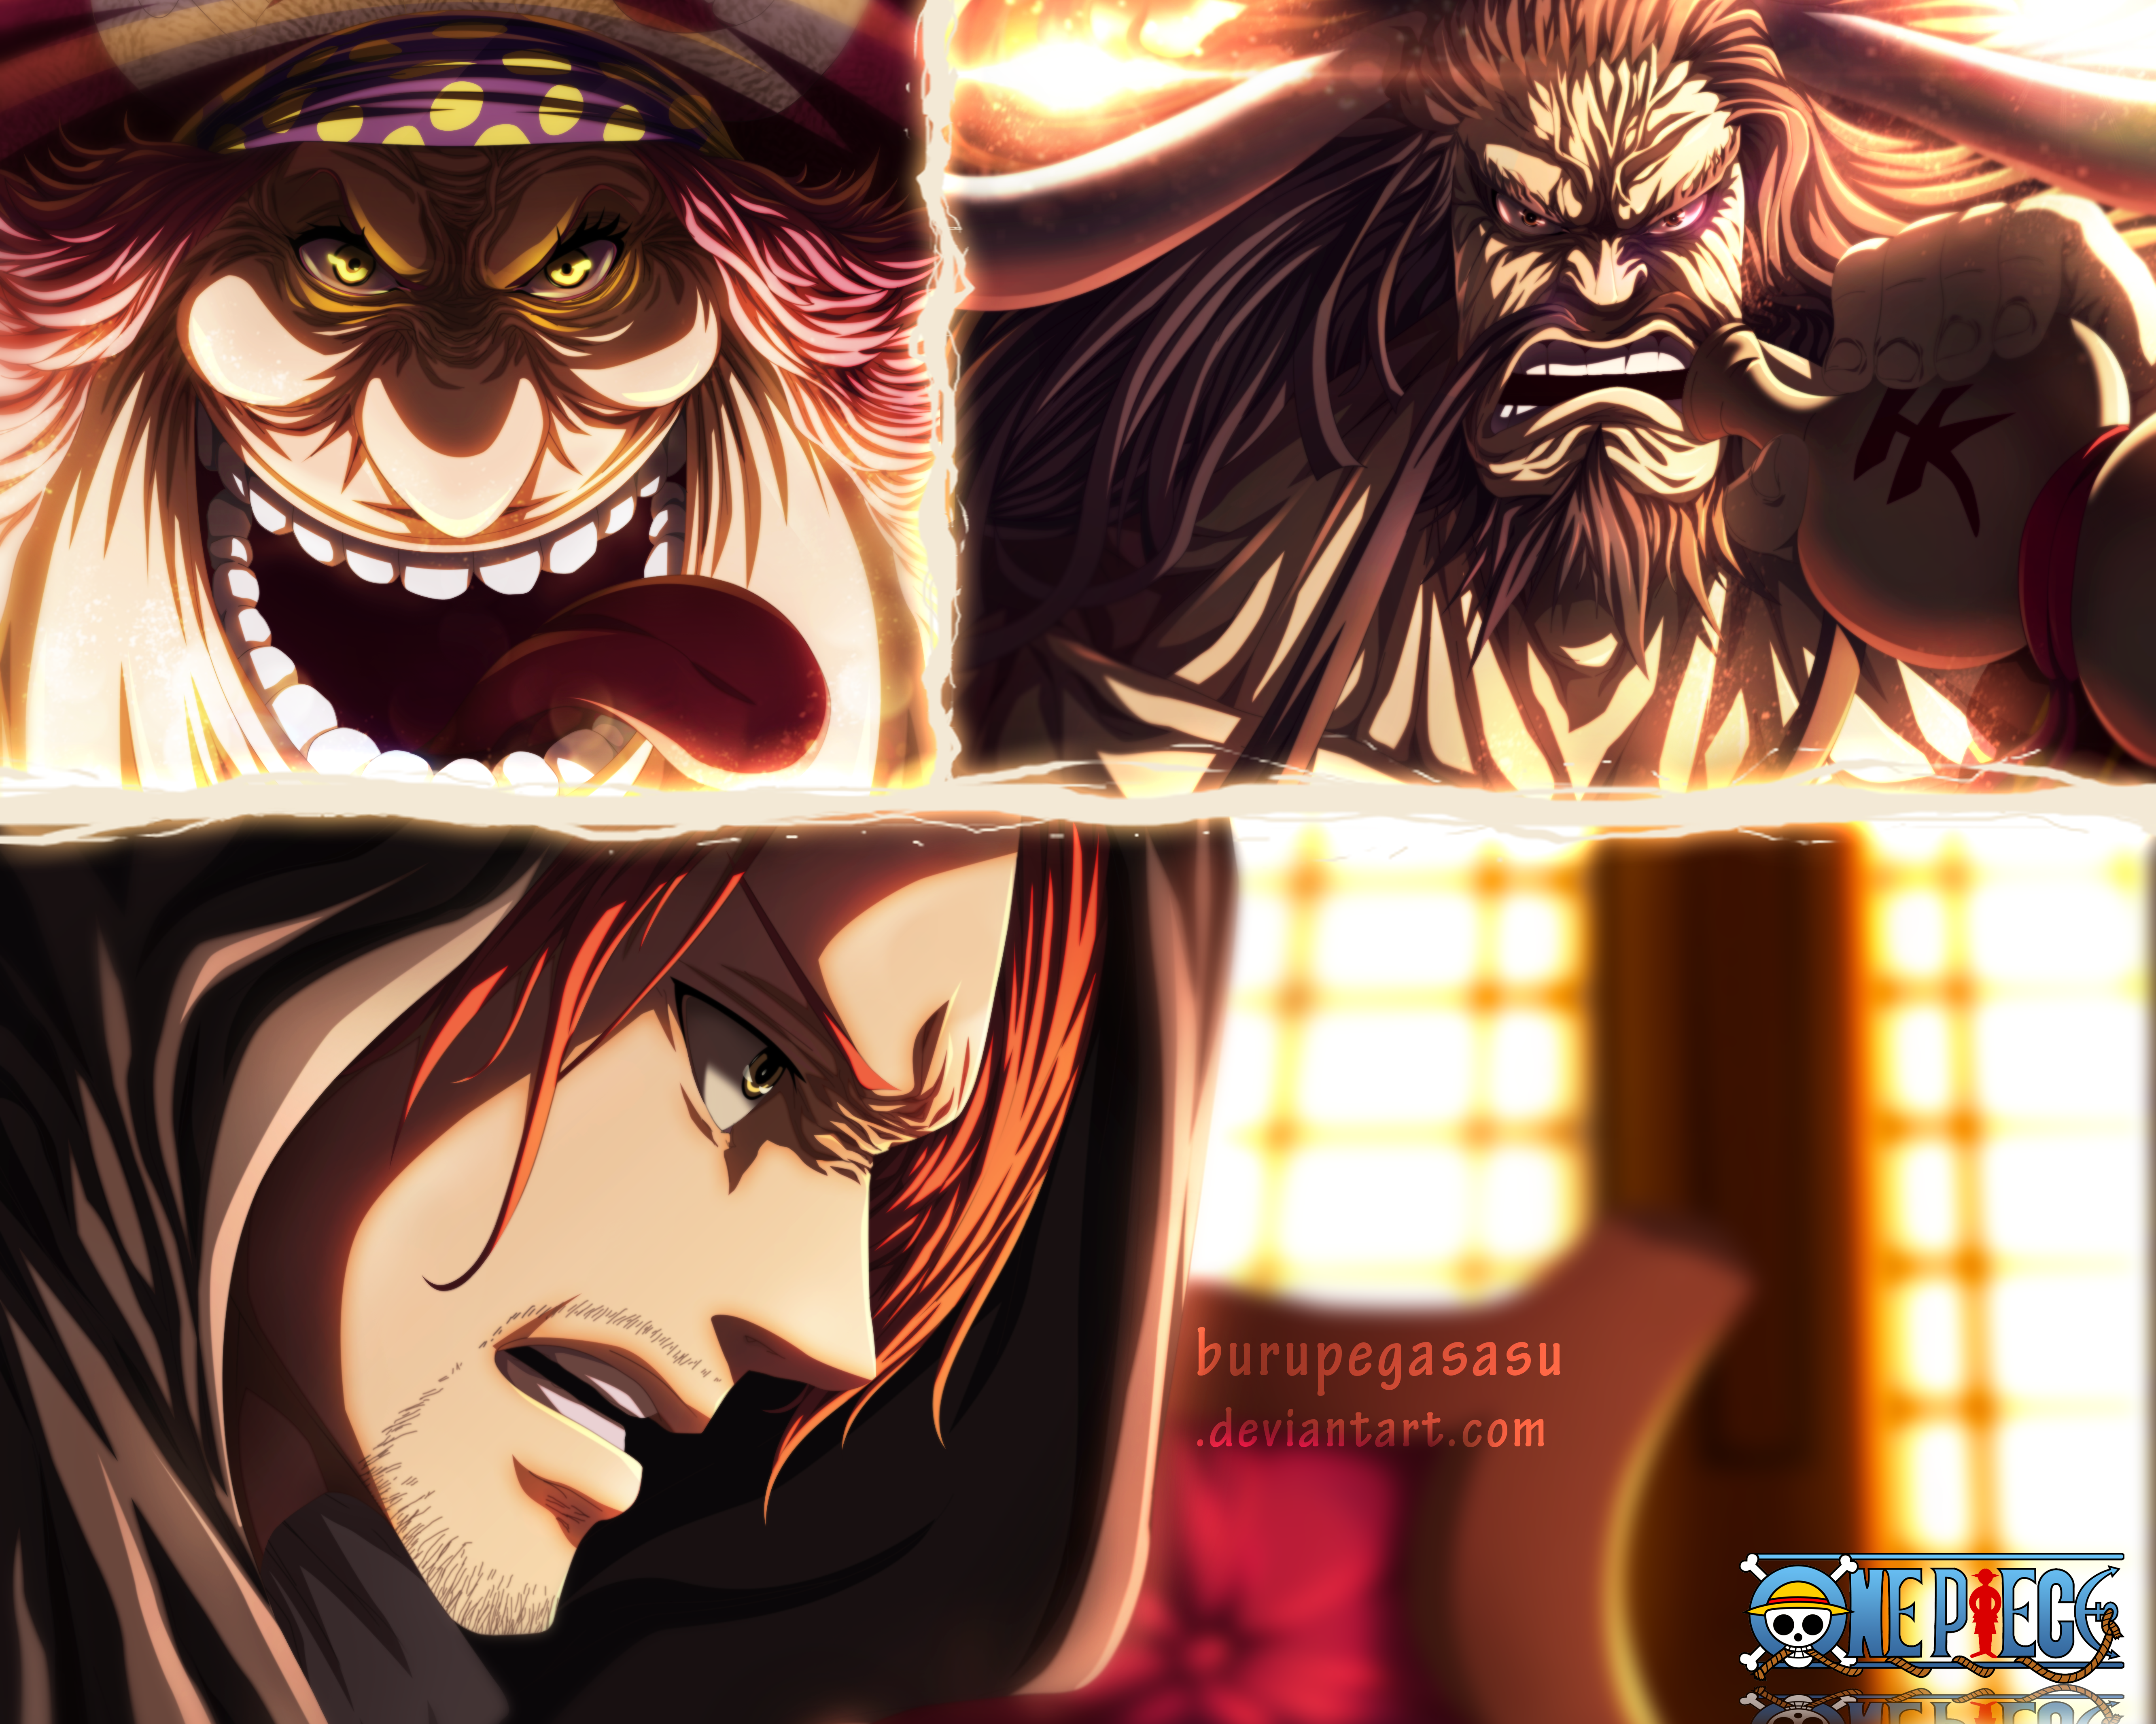 Anime One Piece 4k Ultra HD Wallpaper by Burupegasasu